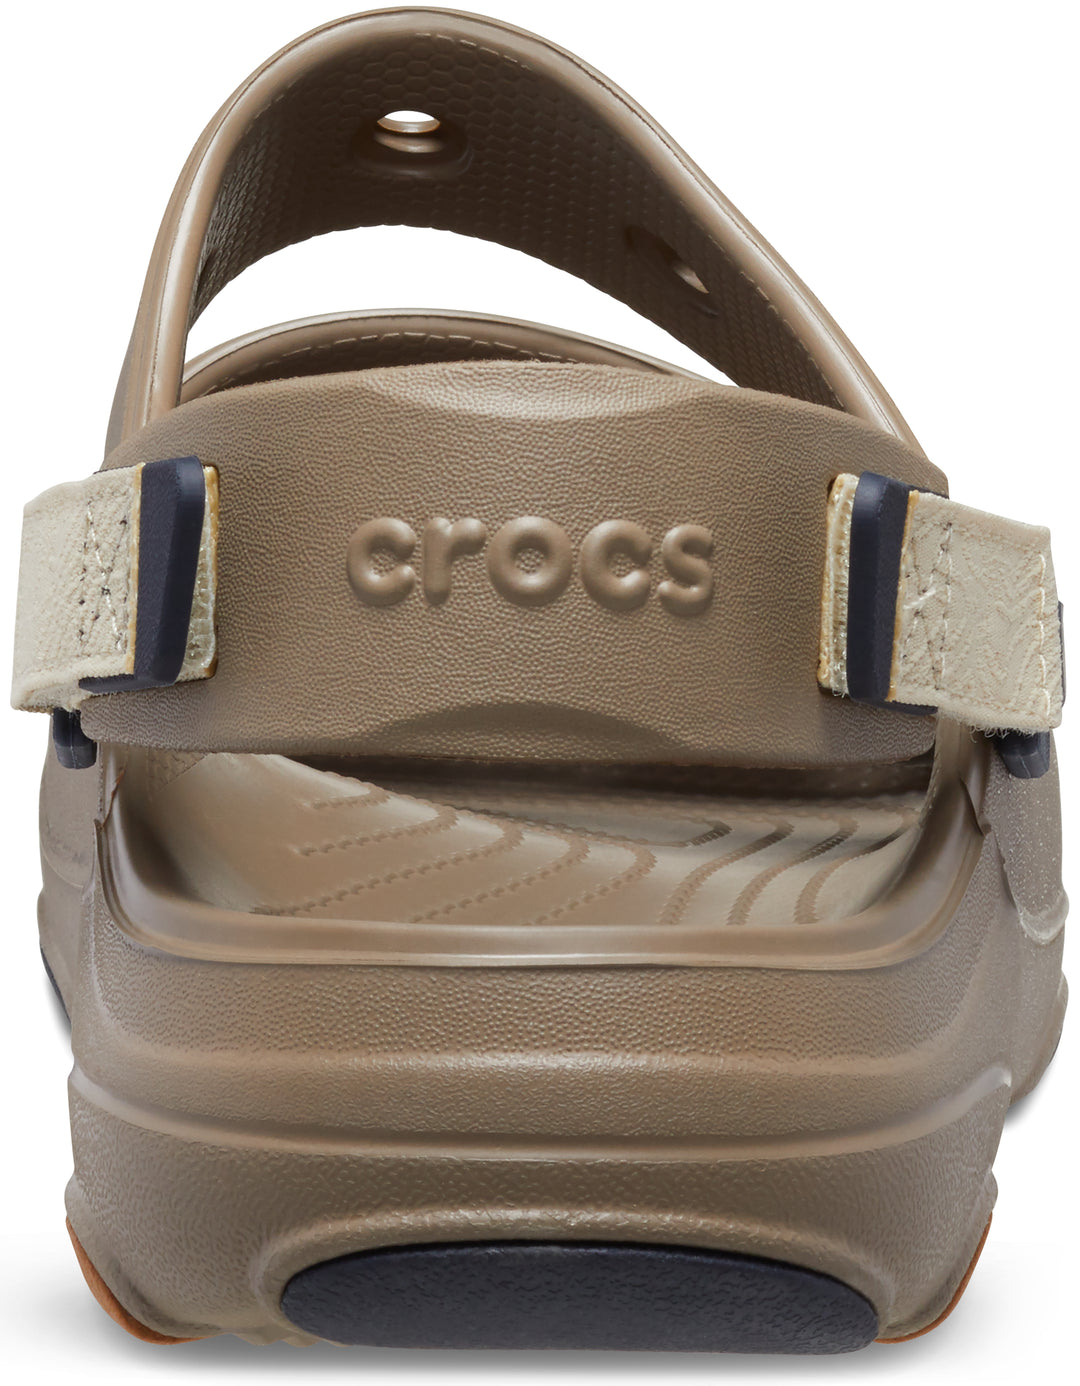 Crocs Adults Unisex All Terrain Sandals In Khaki/Multi